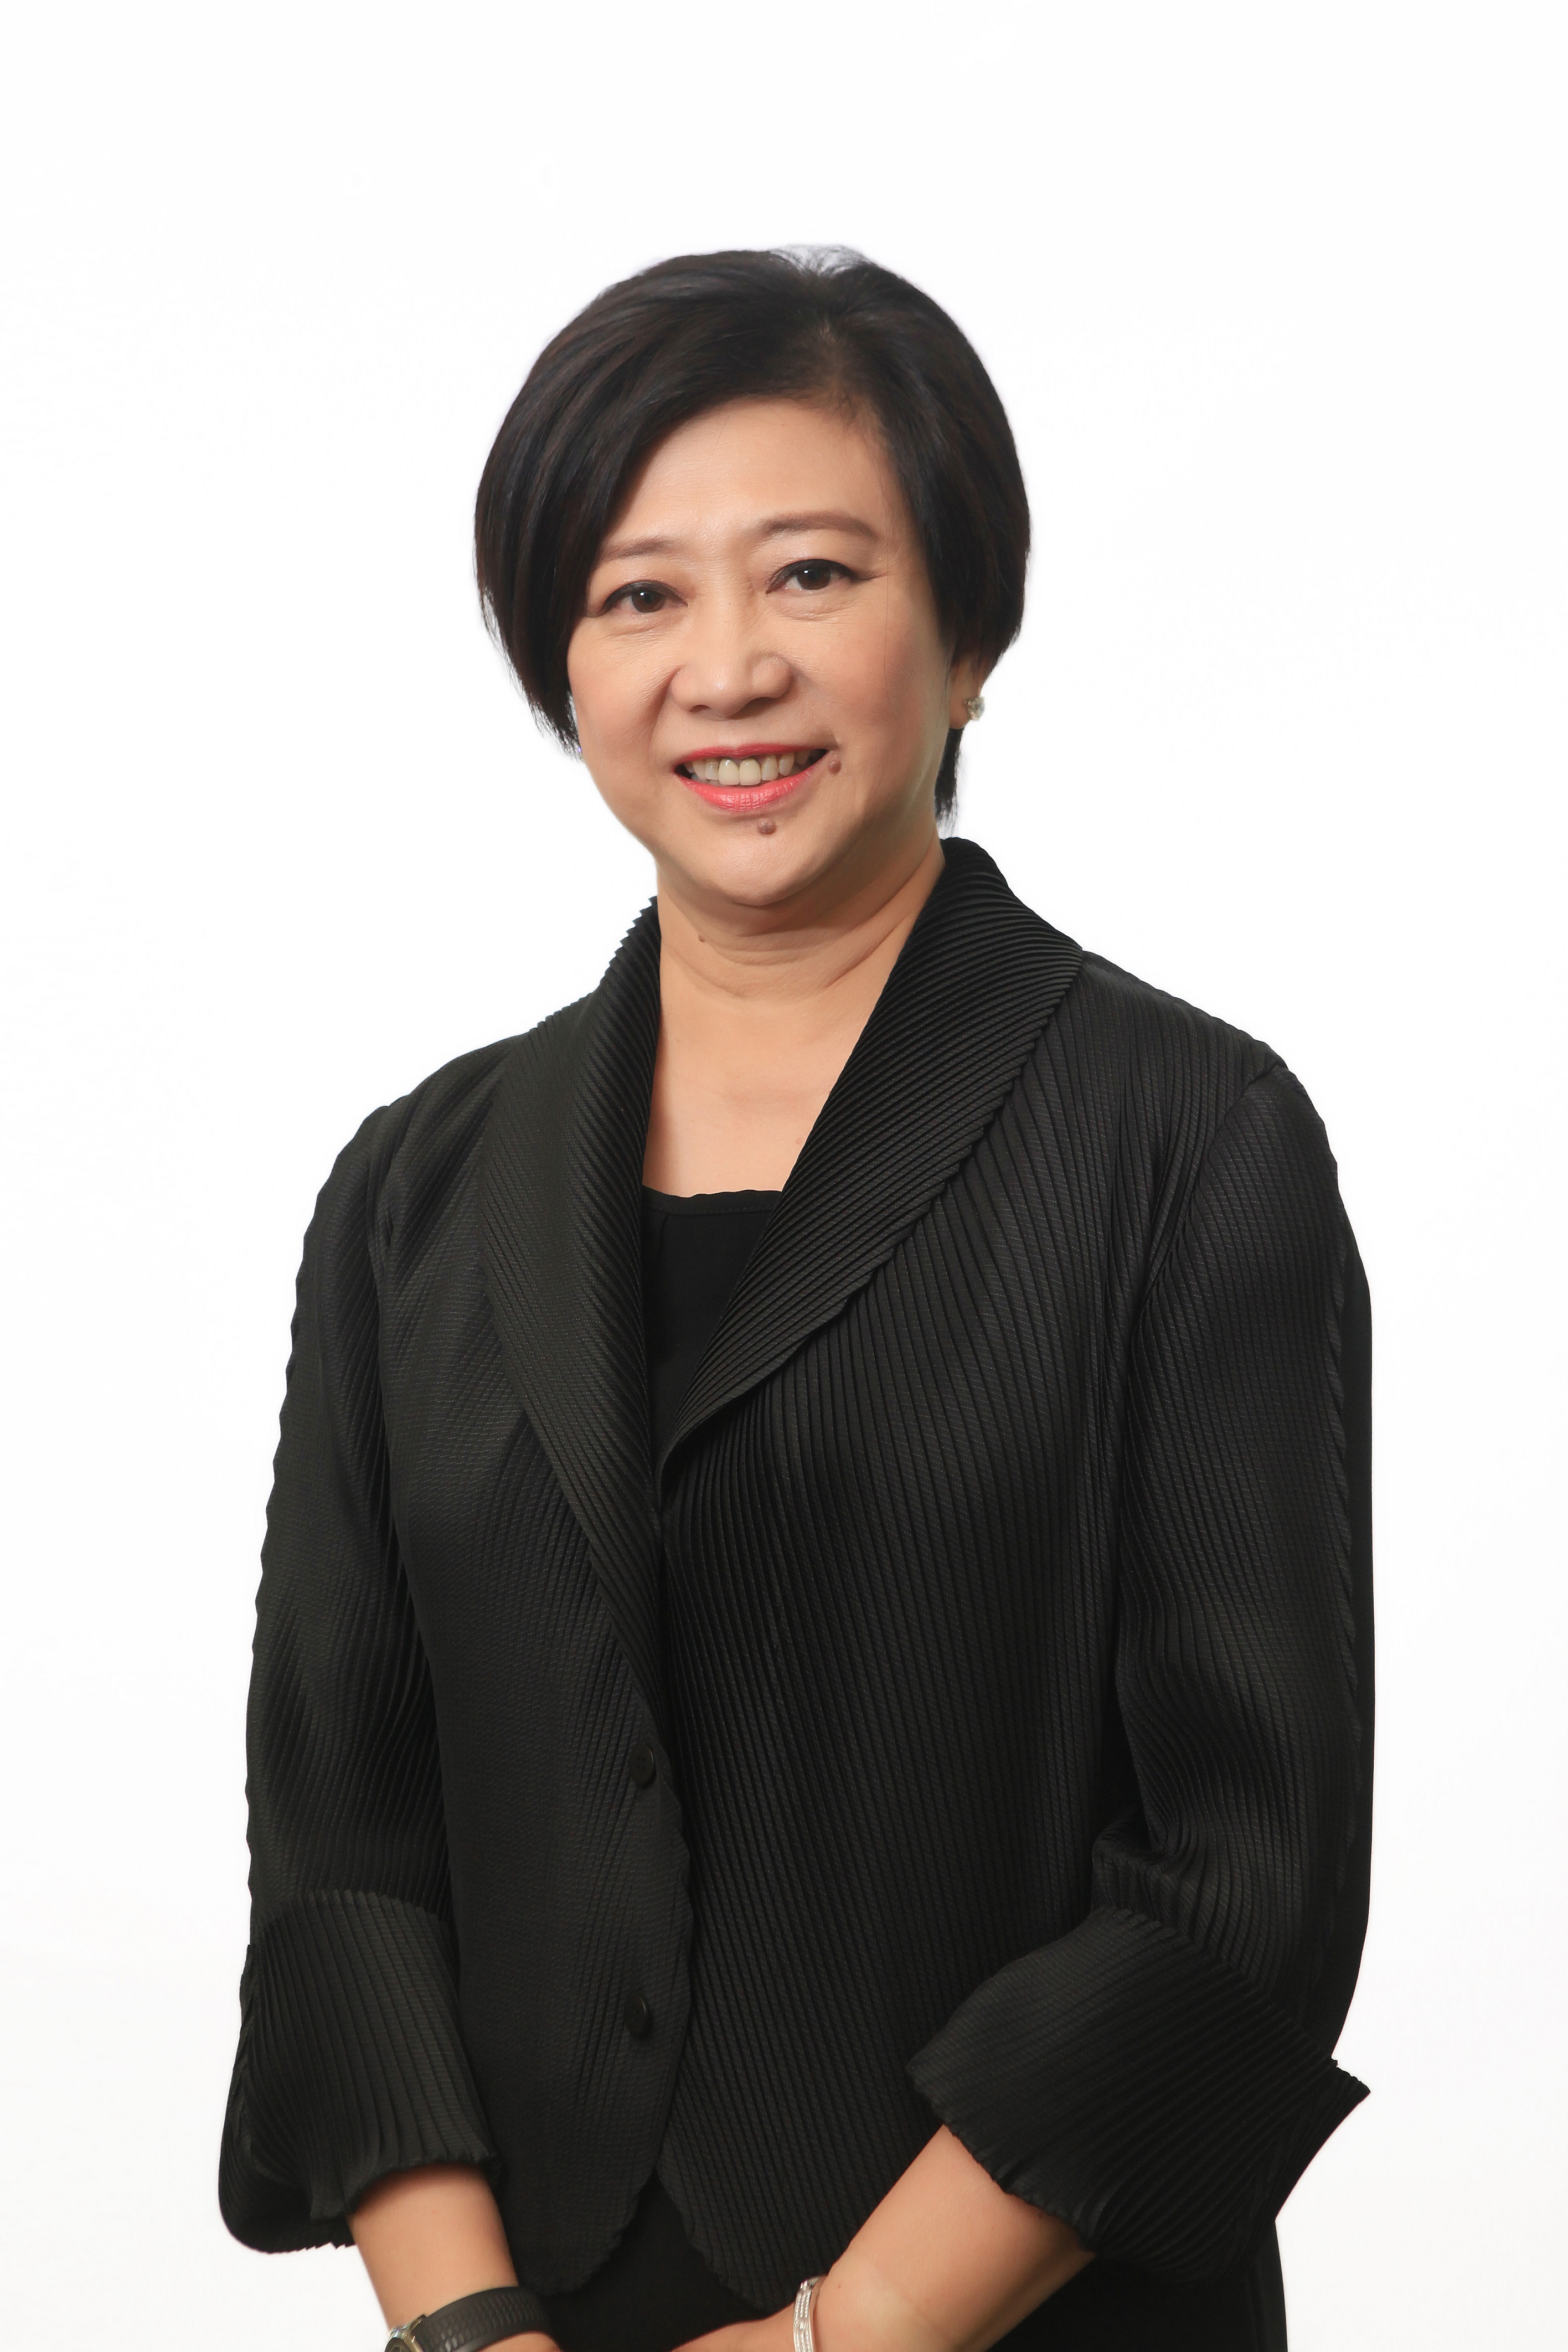 Ms Chua Sock Koong